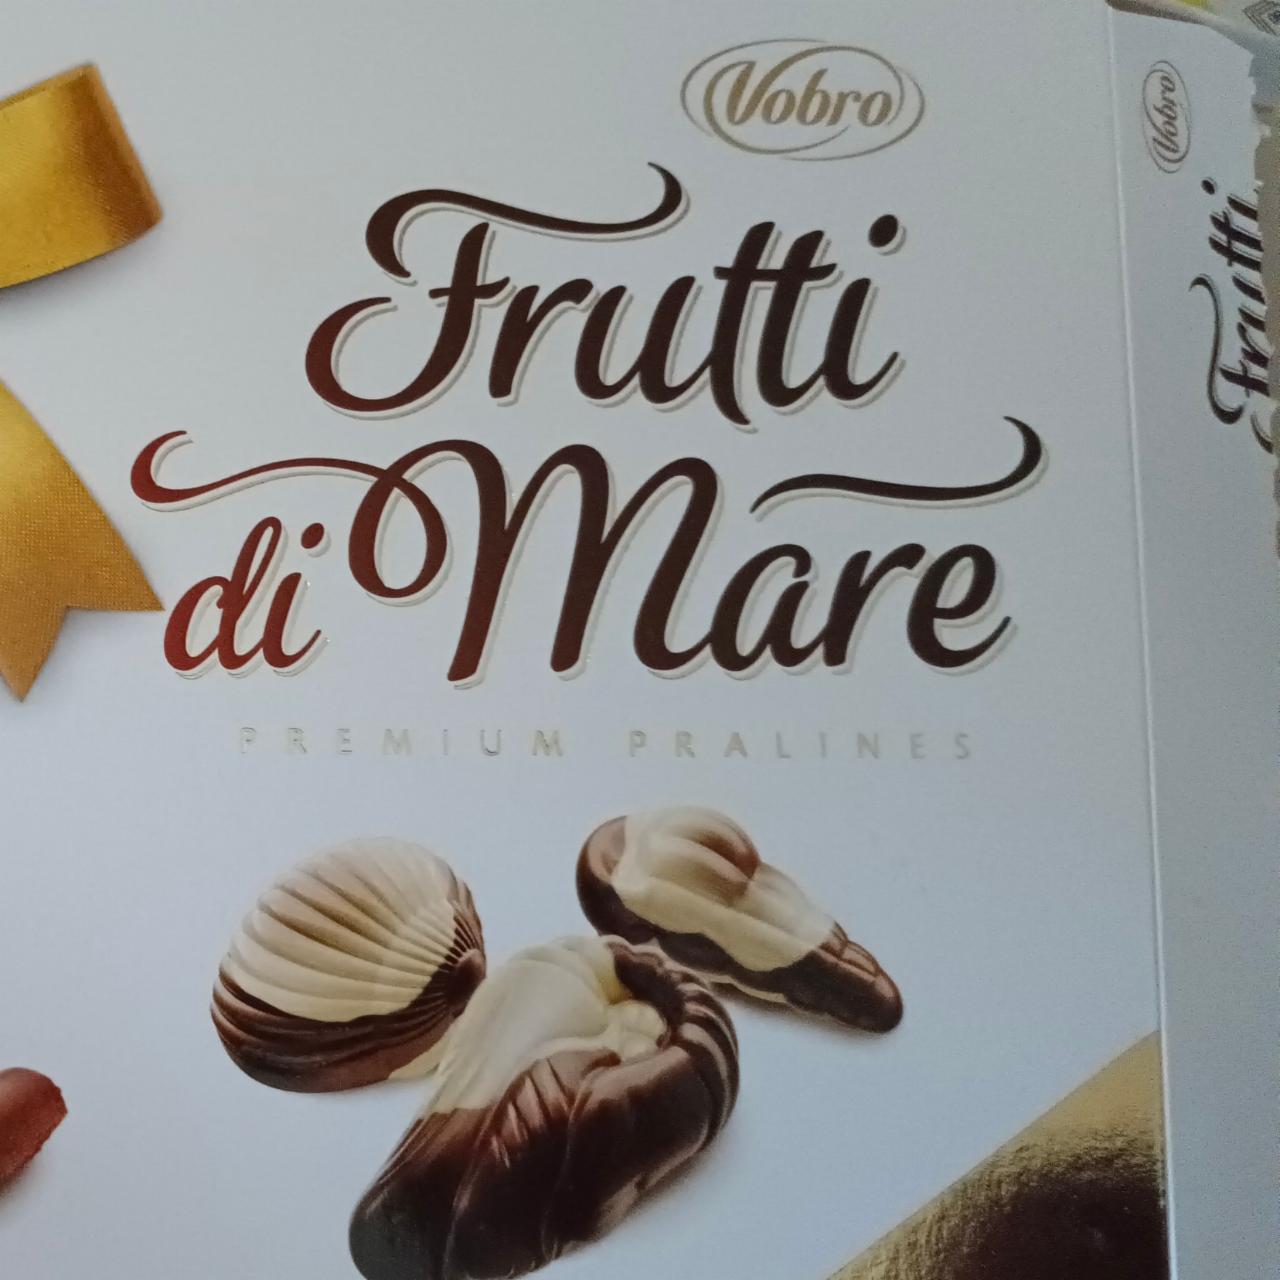 Fotografie - Frutti di Mare Premium Pralines Vobro